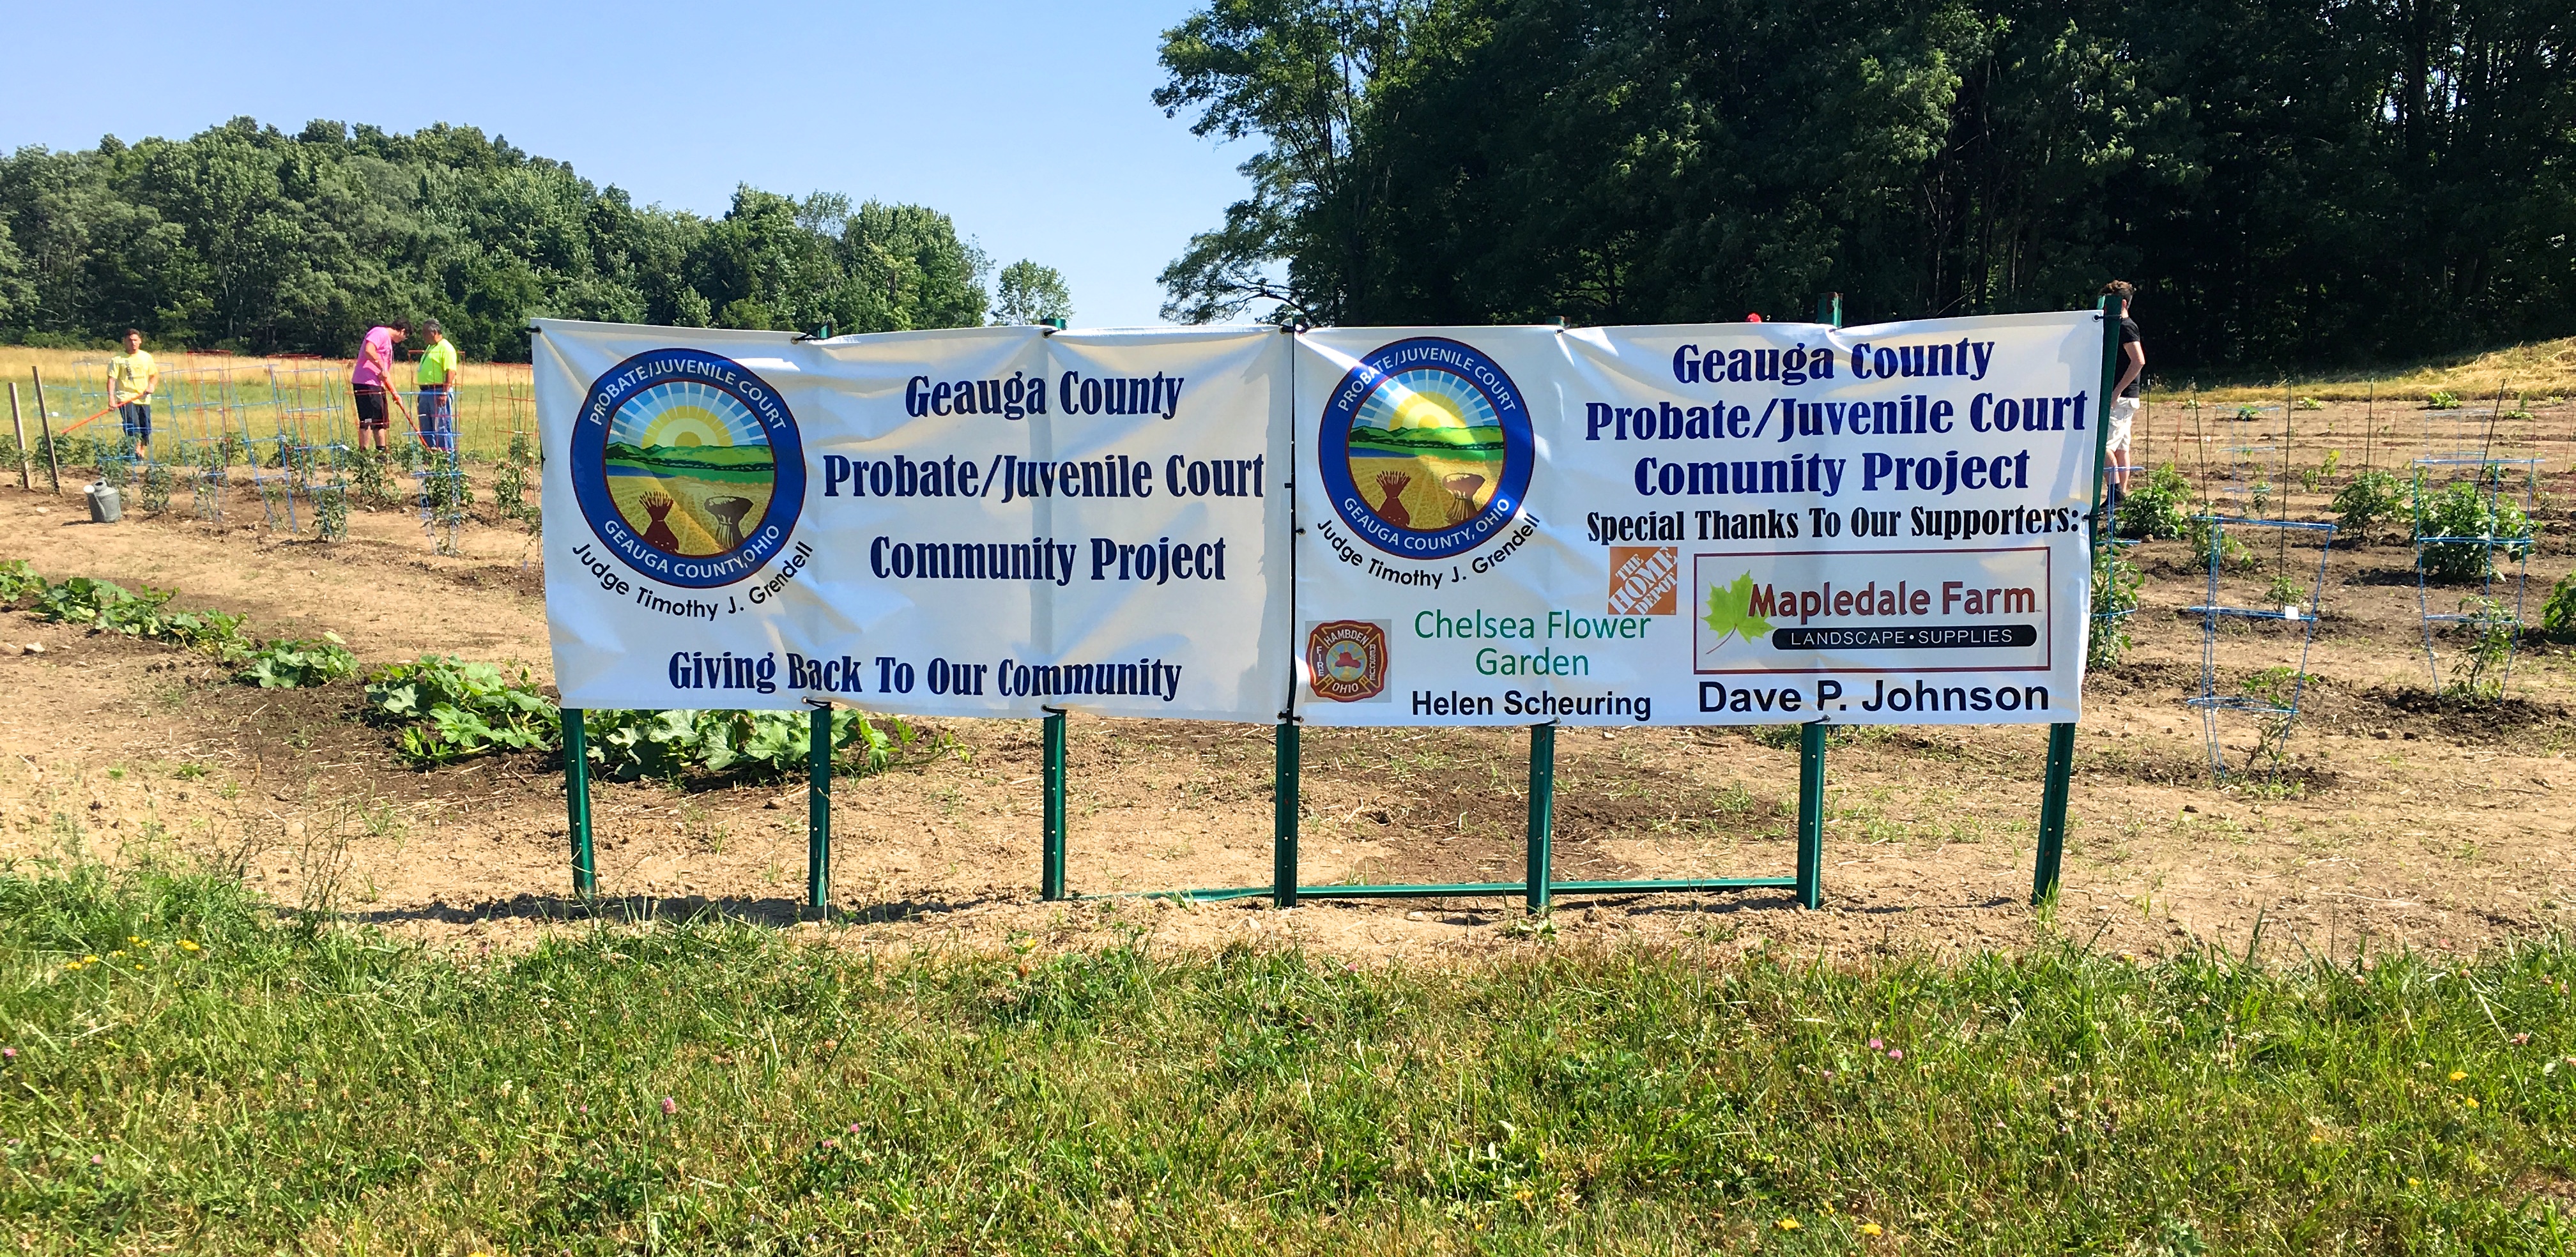 juvenile court's community service garden donates record harvest to